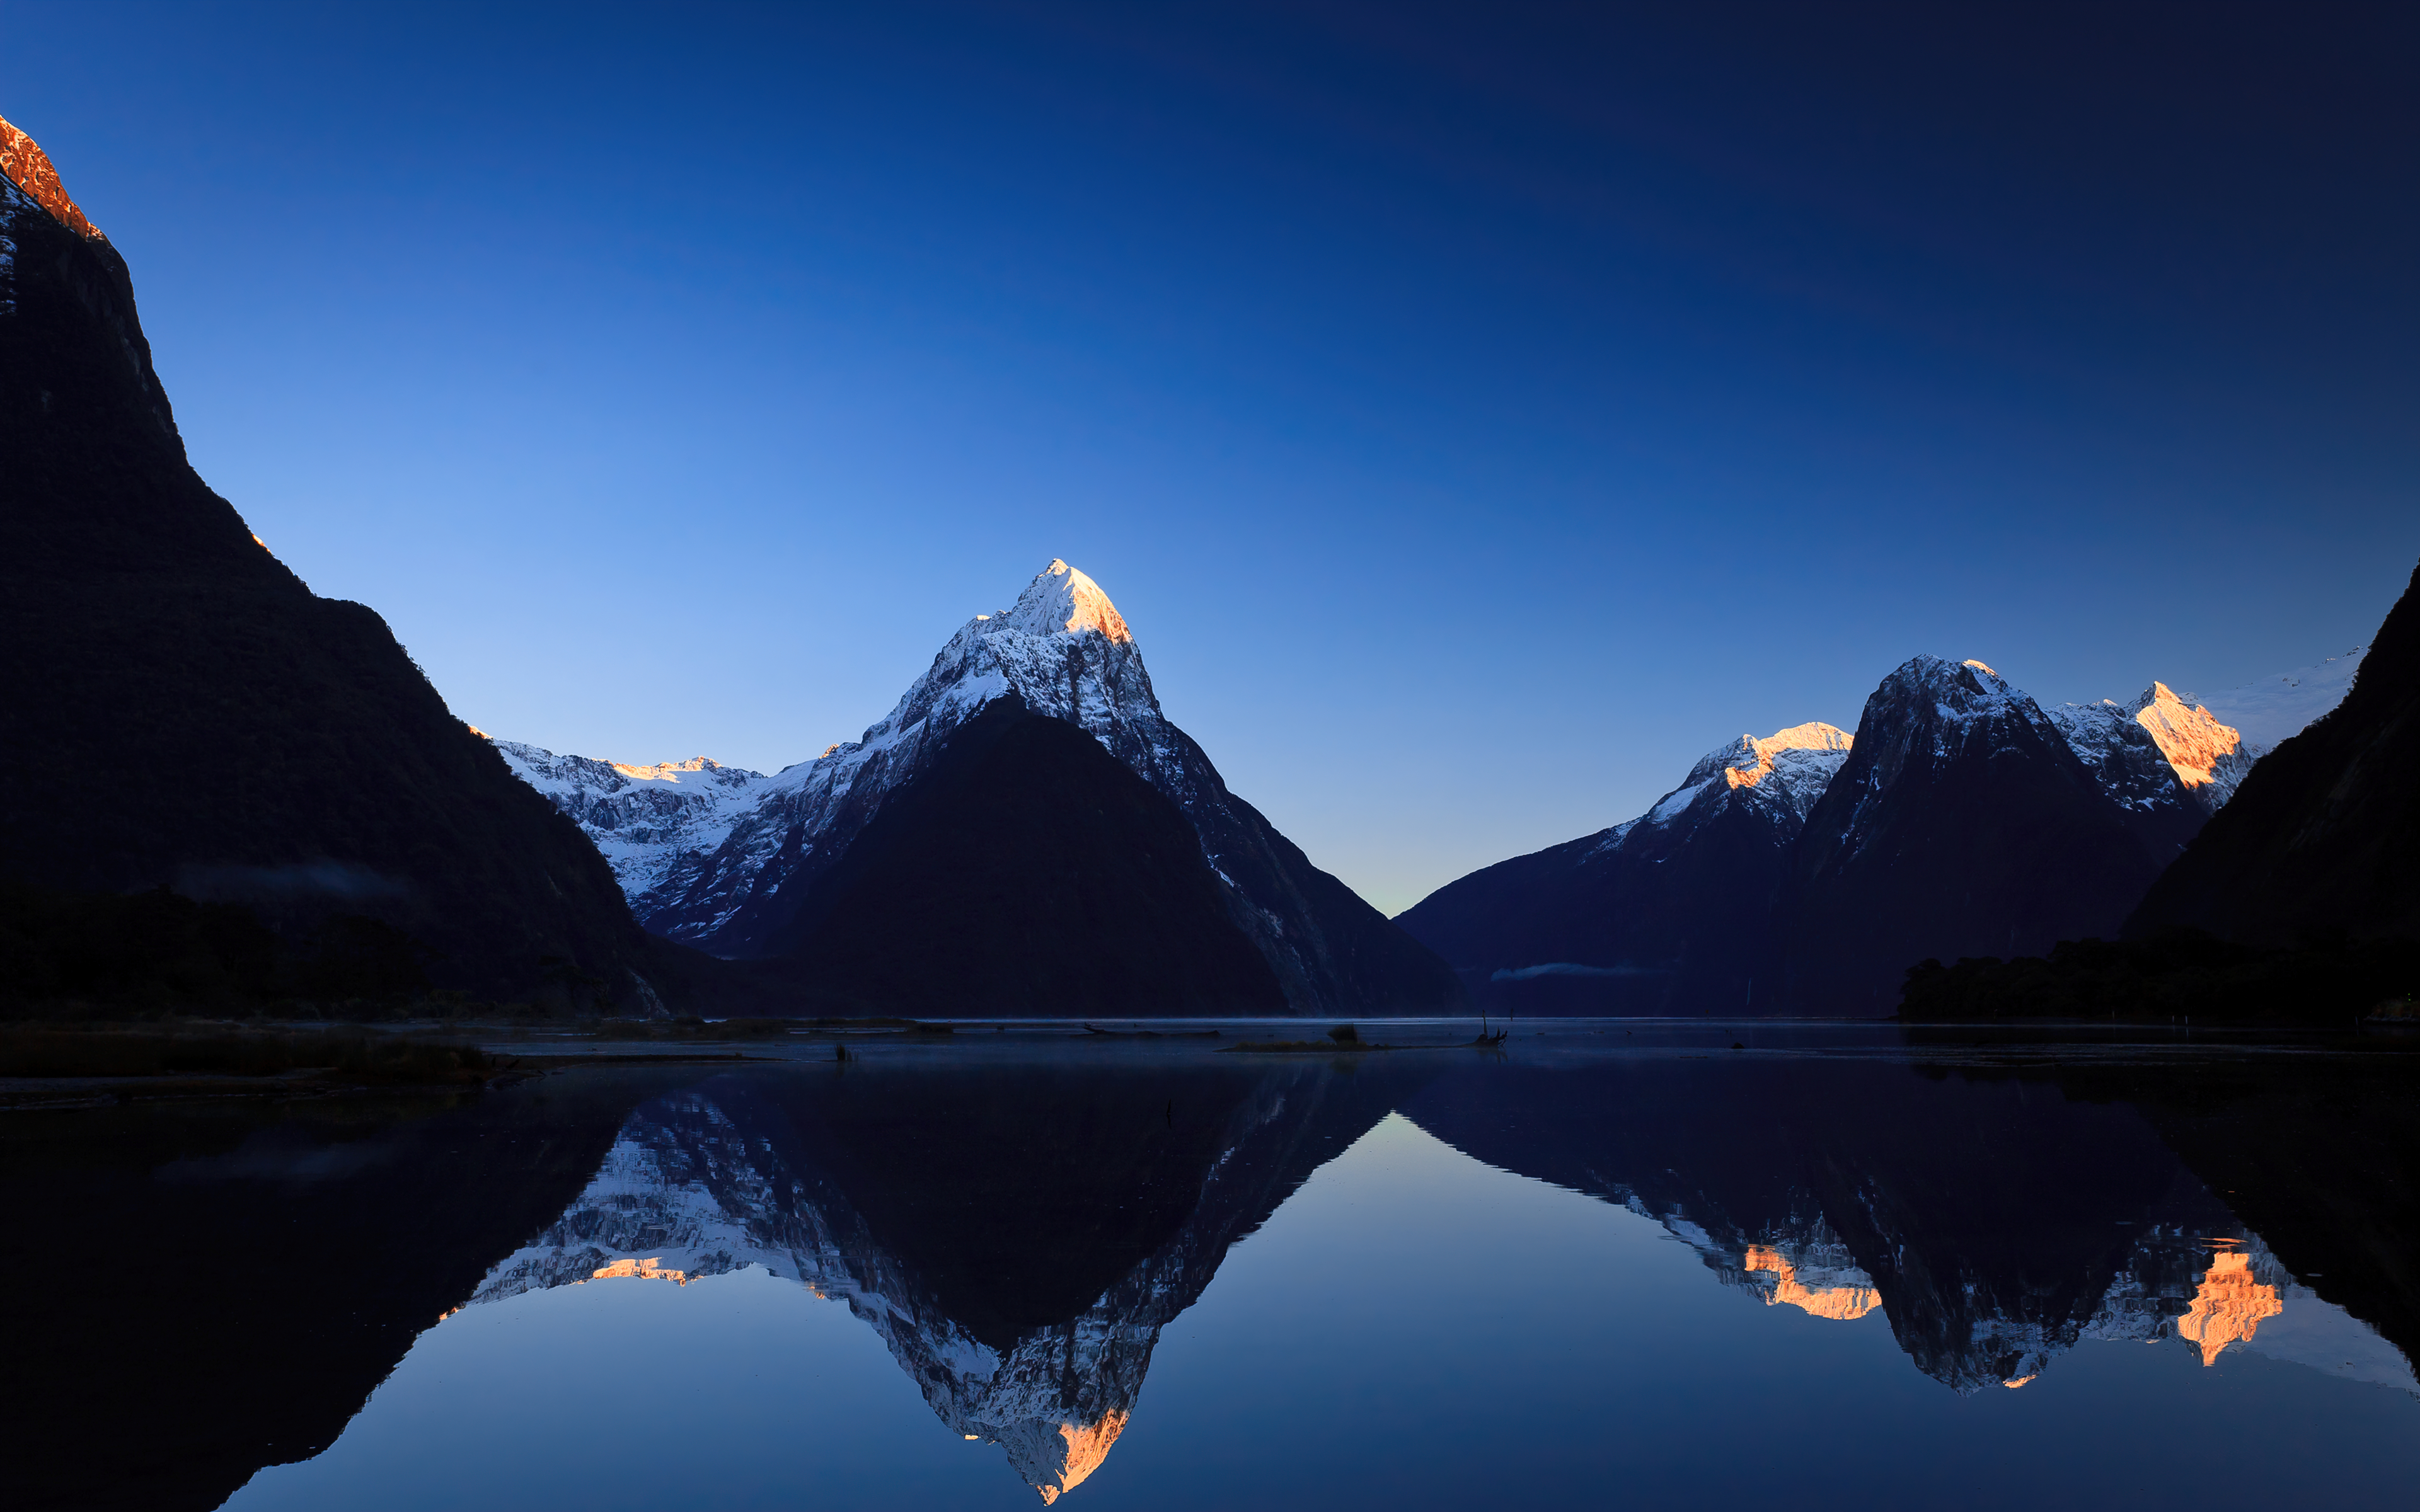 Обои стола 1366. Милфорд саунд новая Зеландия. Фьорд Милфорд-саунд в новой Зеландии. Гора Таранаки новая Зеландия.